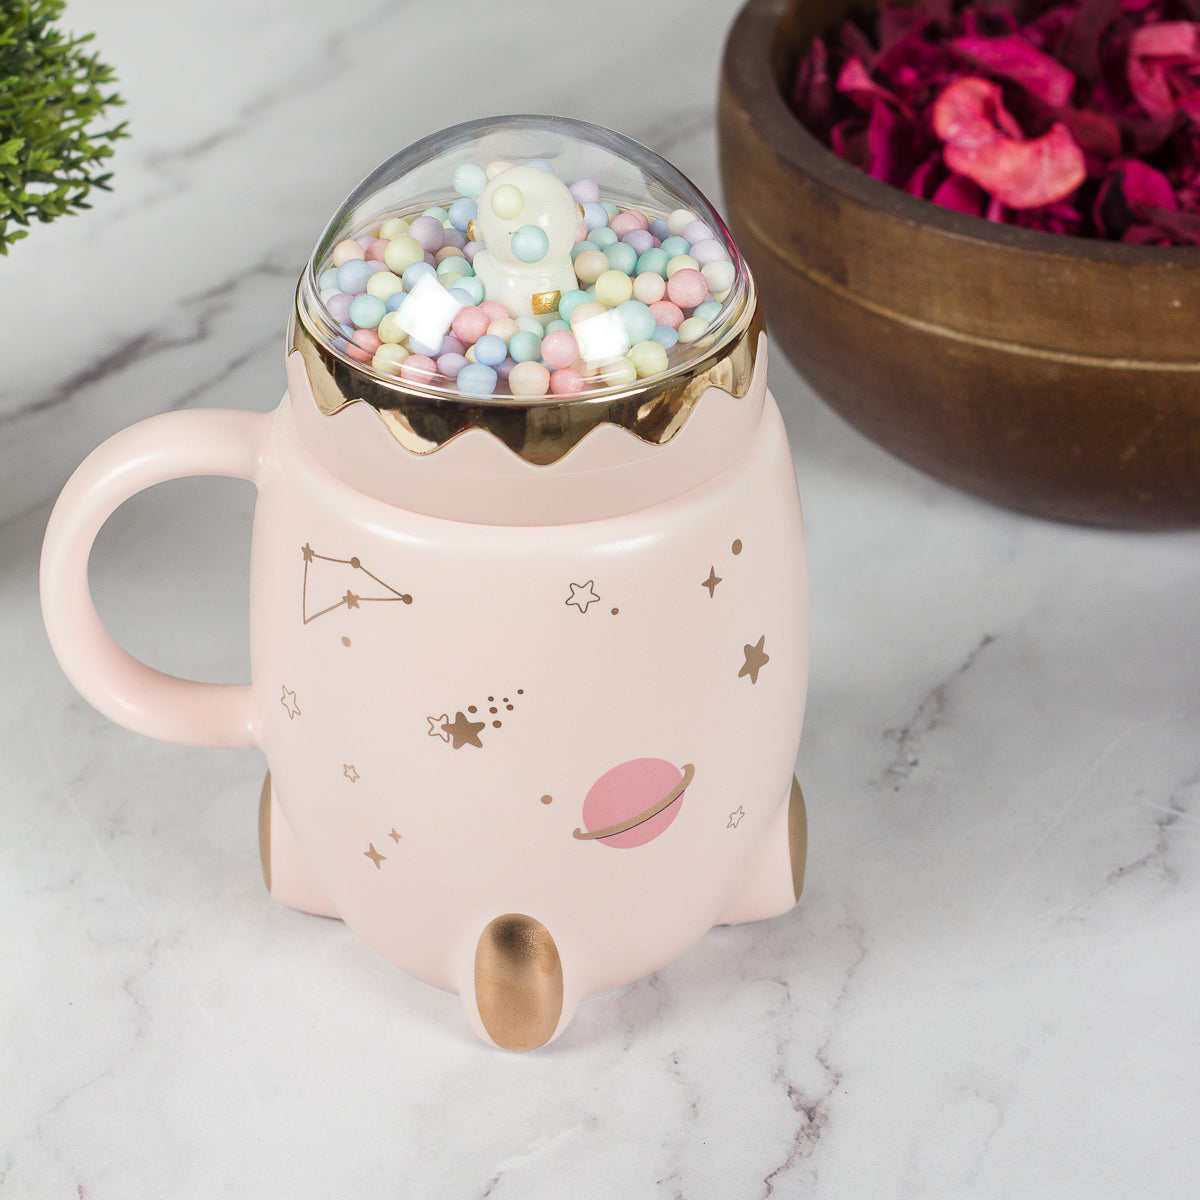 Astronaut Ceramic milk mug - pink